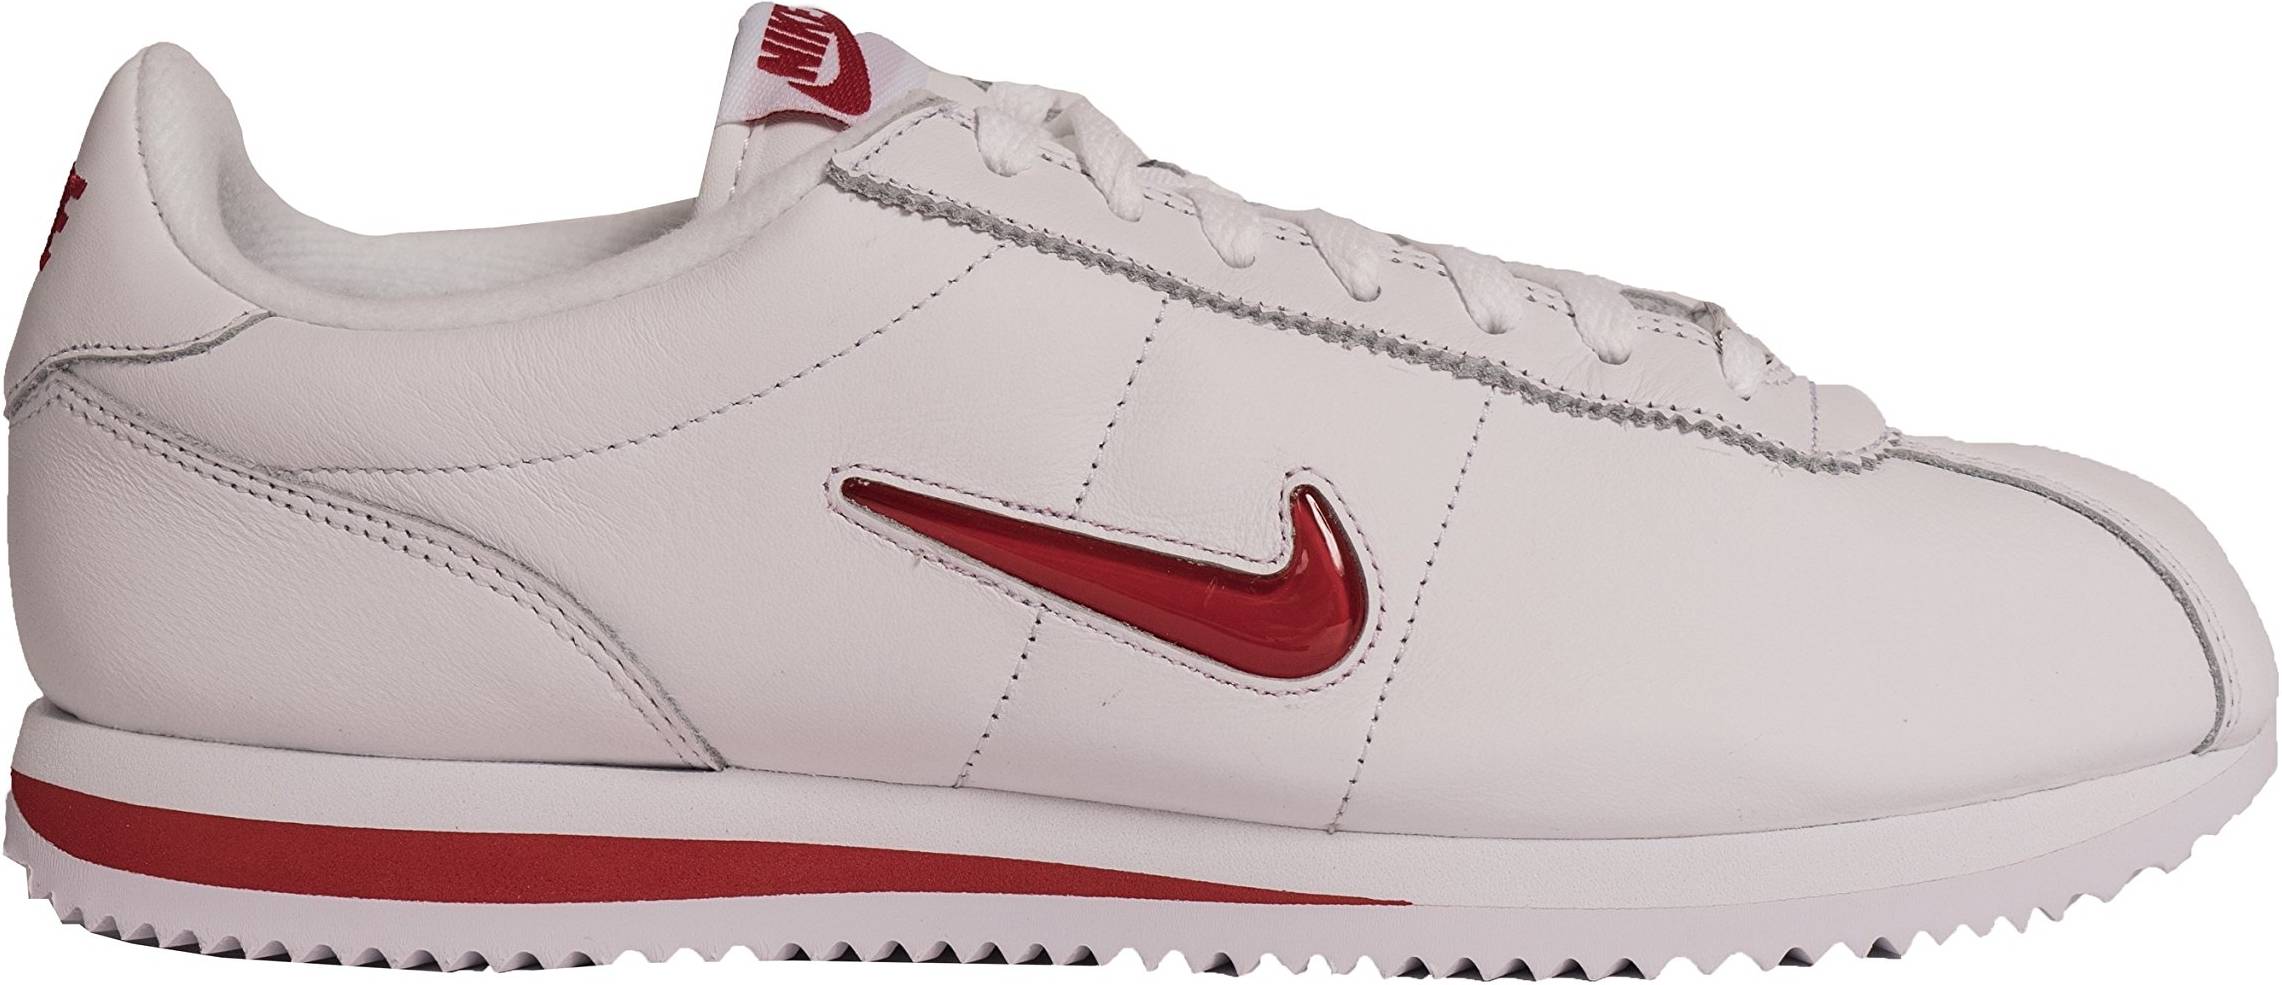 Nike Cortez sneakers in white |